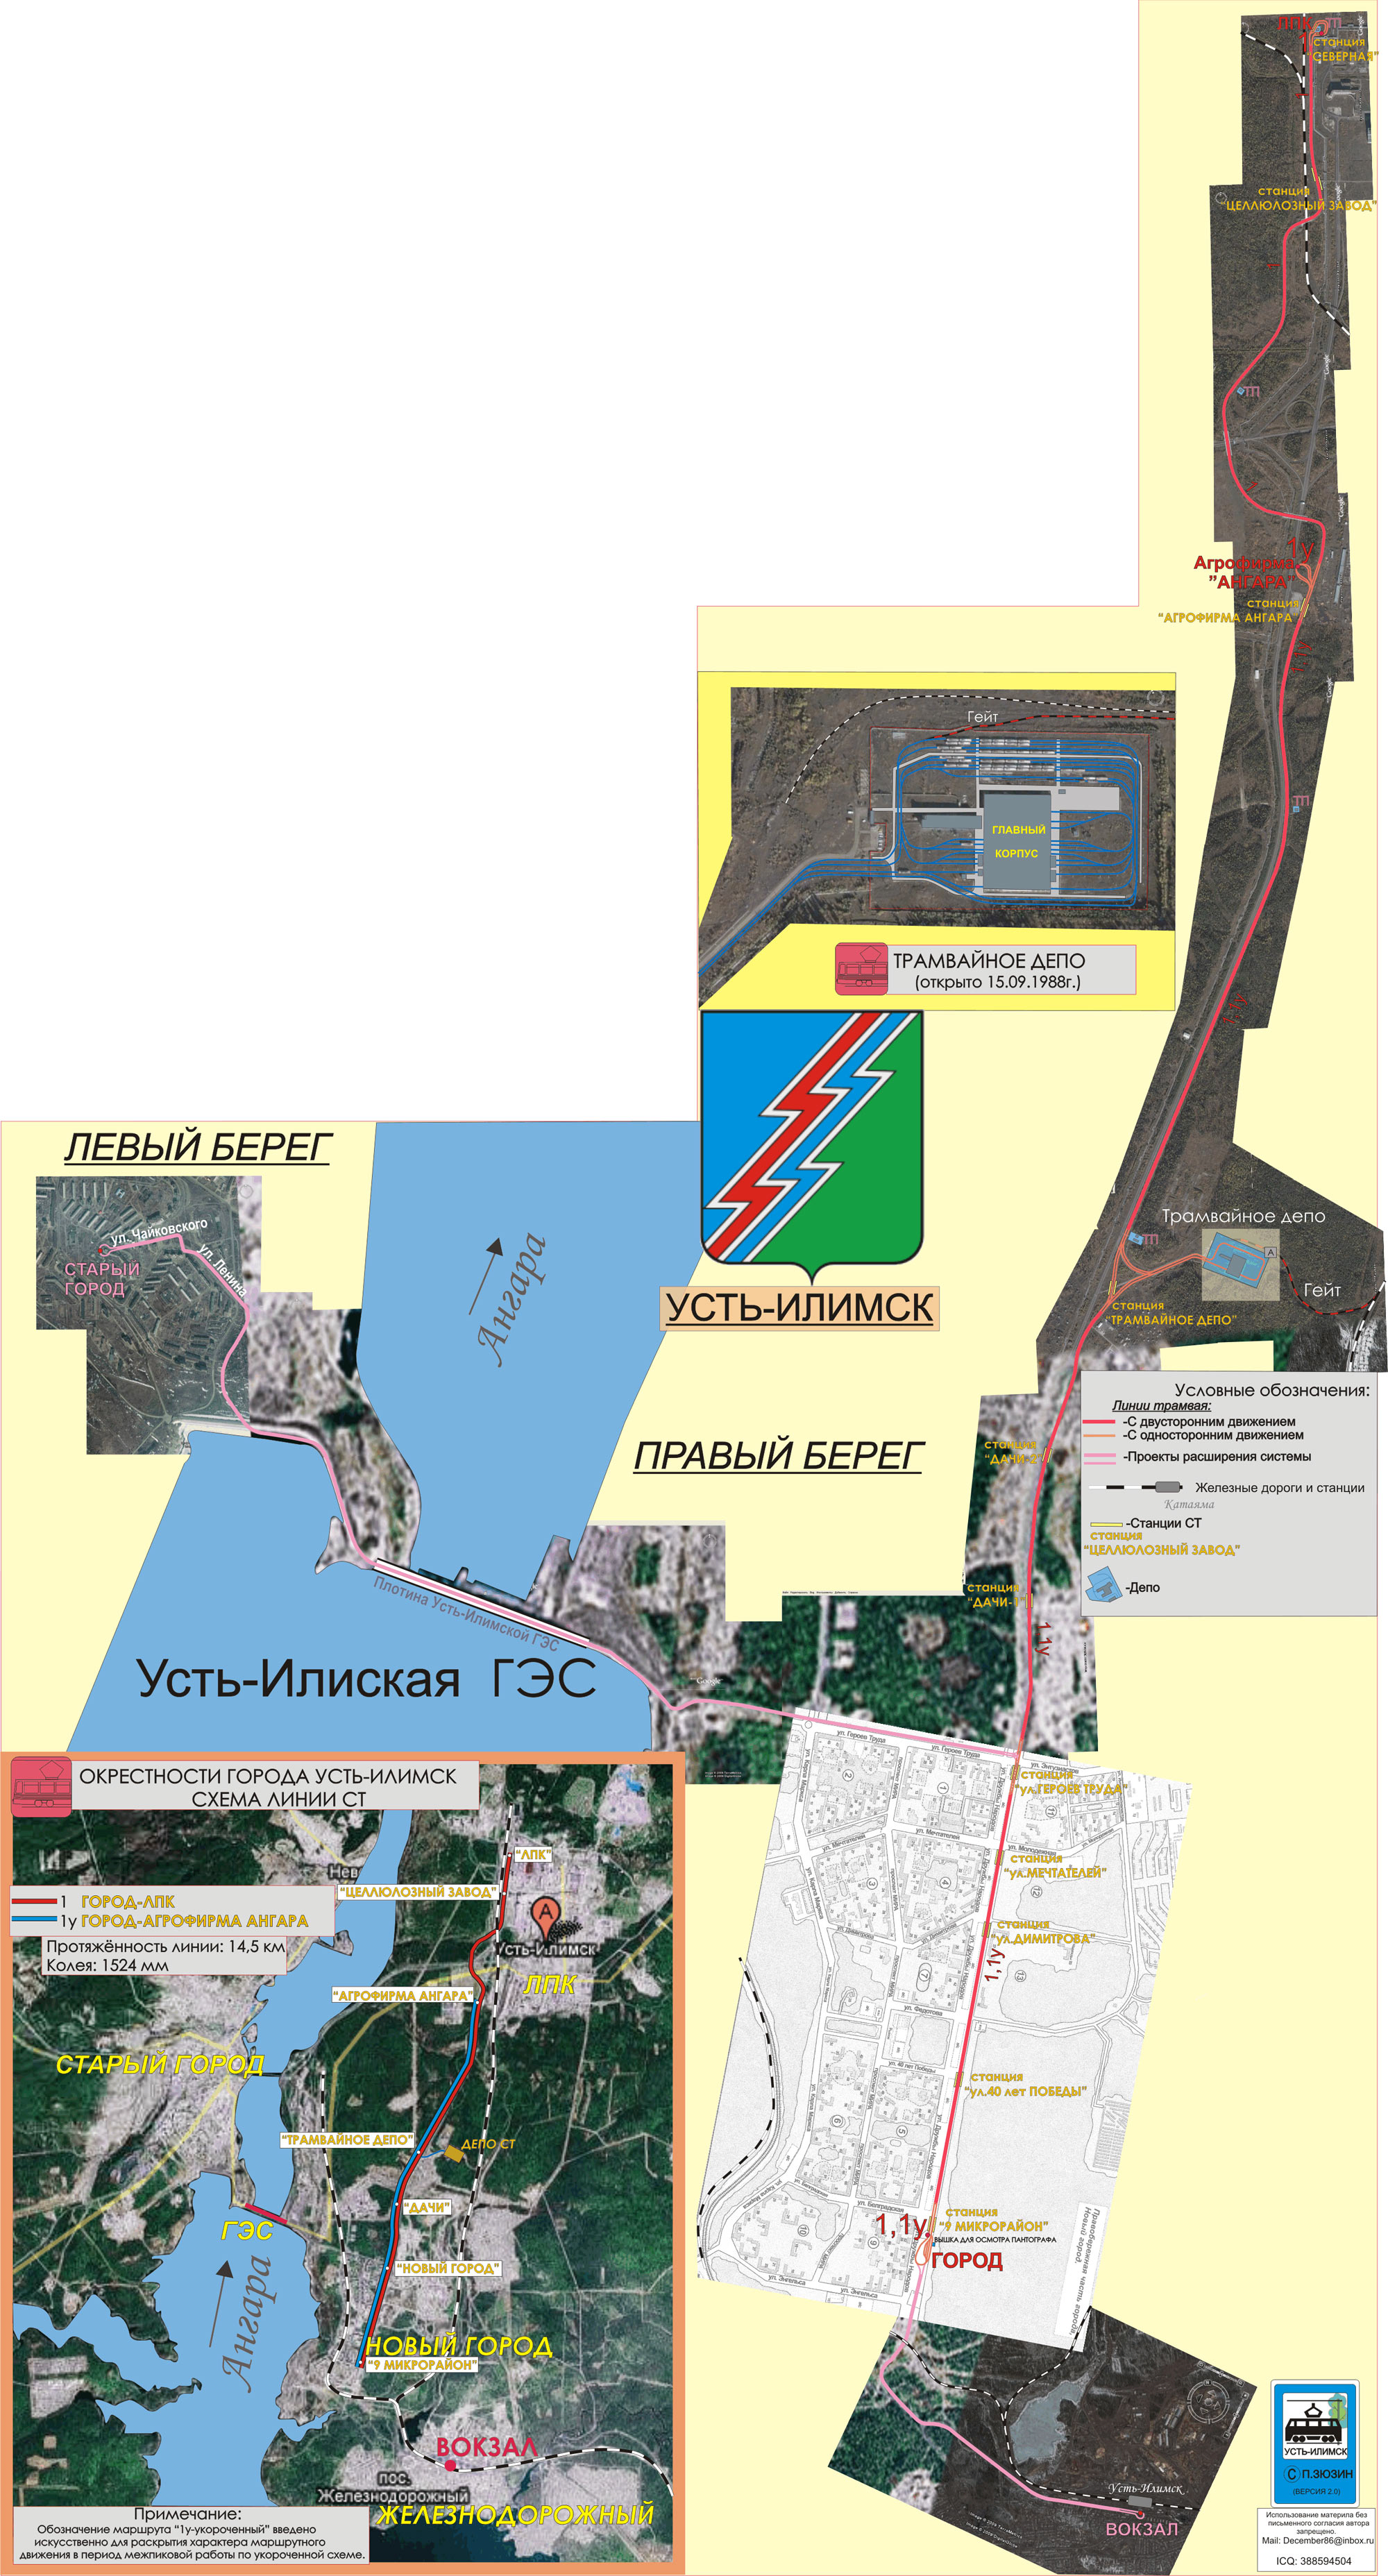 Ust-Ilimsk — Maps